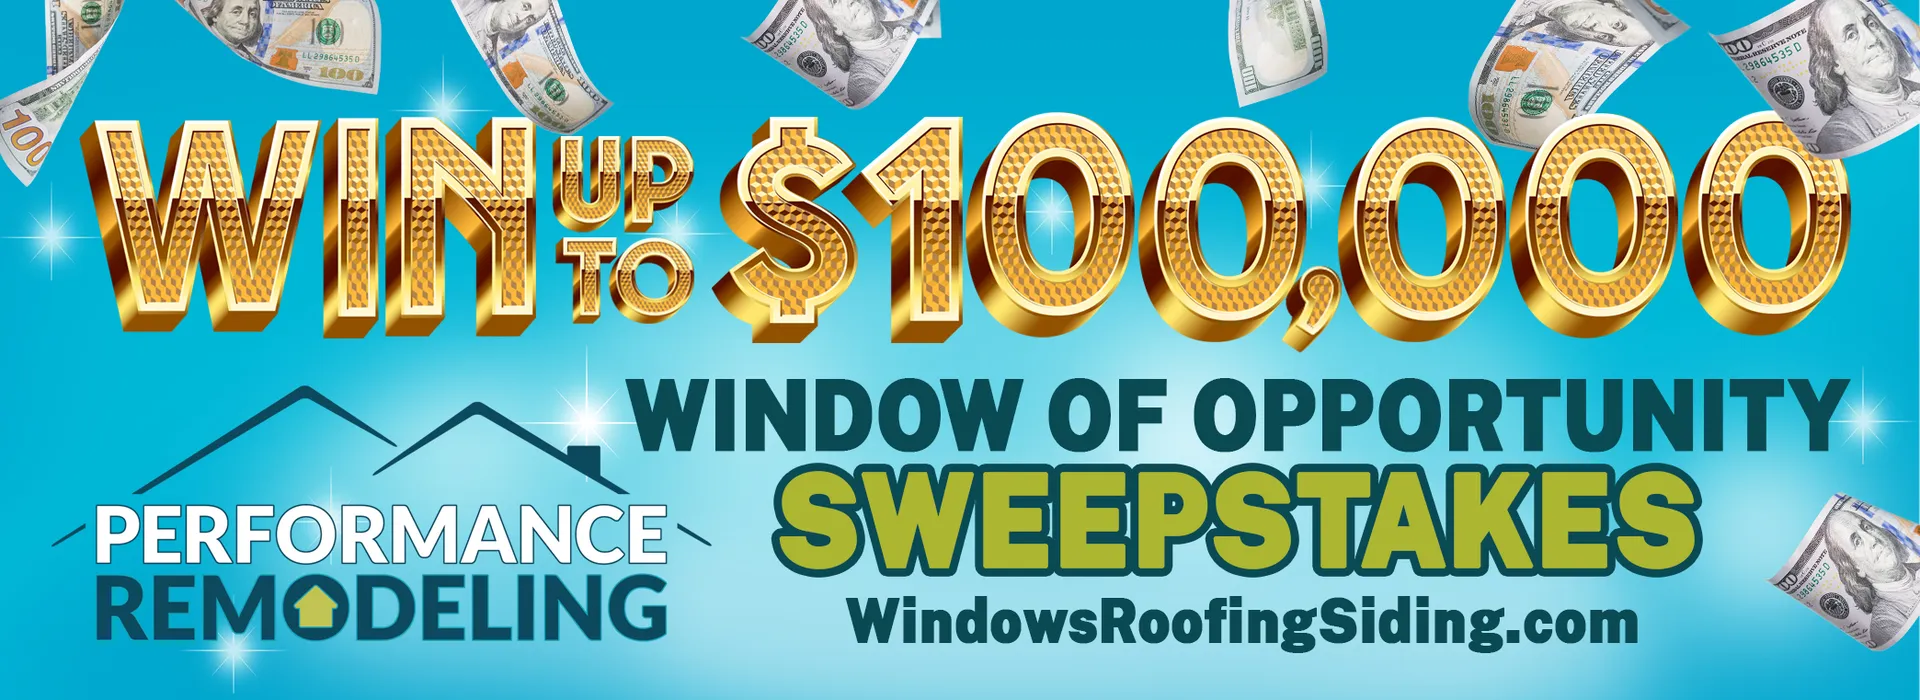 $100,000 window of opportunity sweepstakes